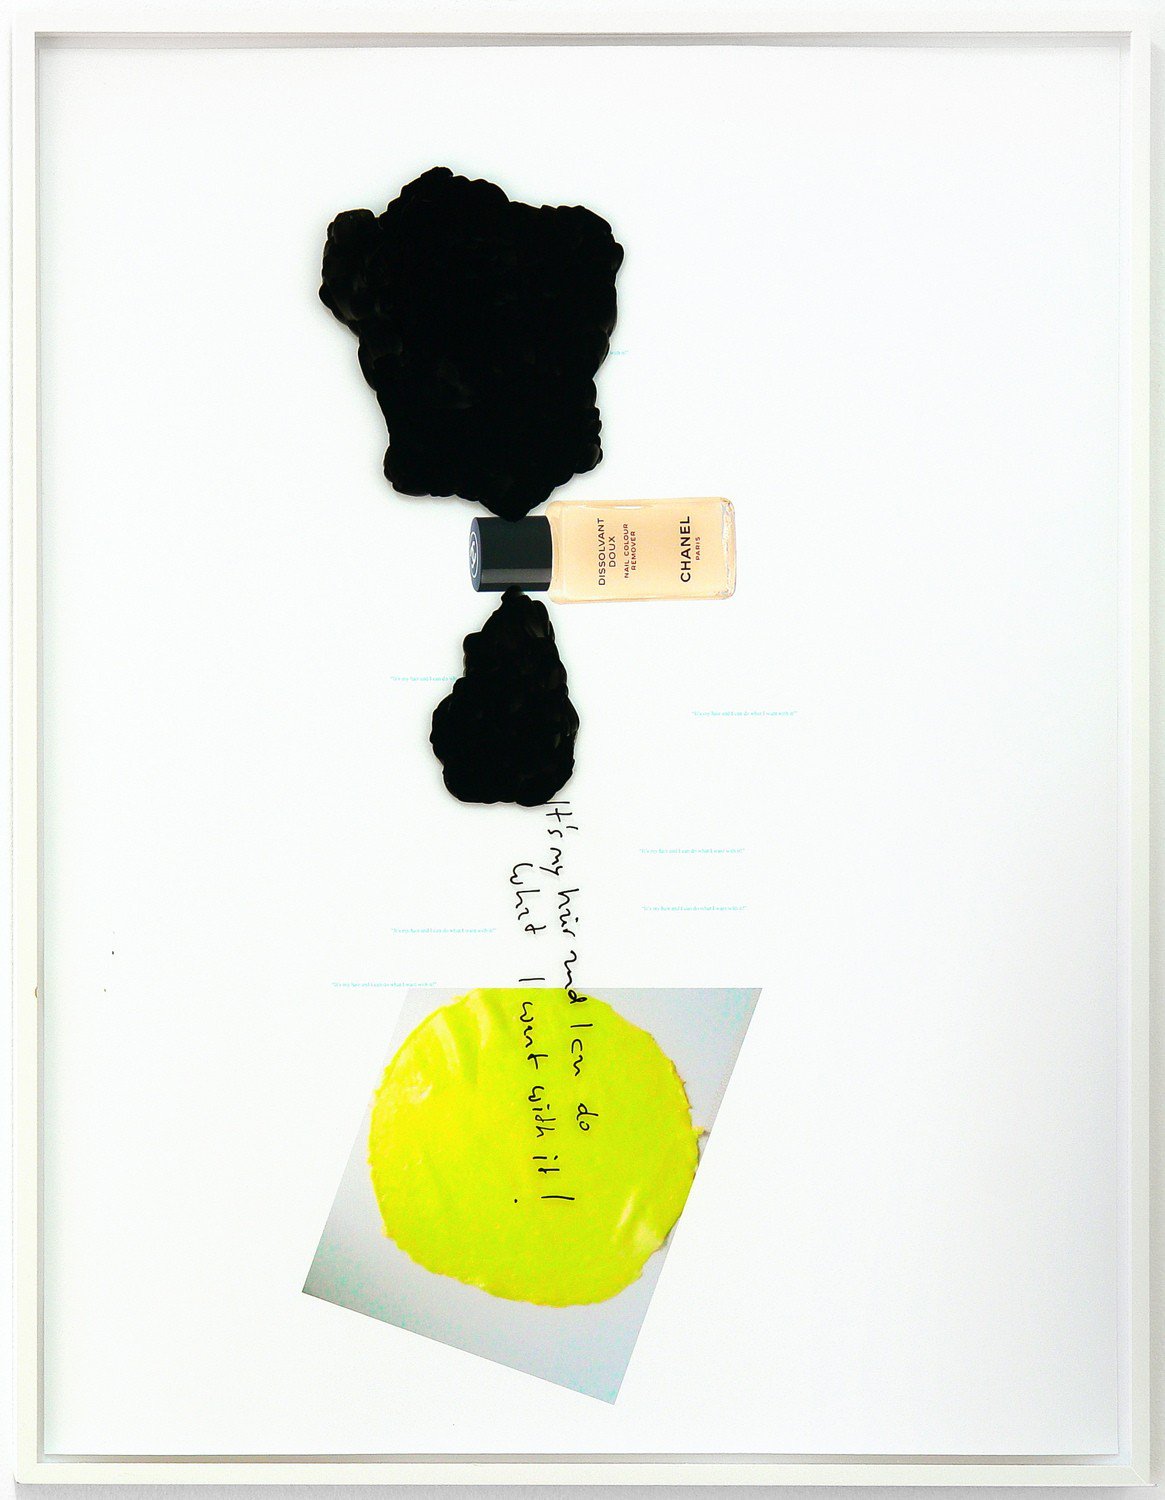 Lisa HolzerOmelette passing under Chanel Dissolvent, 2013Pigment print on cotton paper, acrylic on glass88 x 68 cm